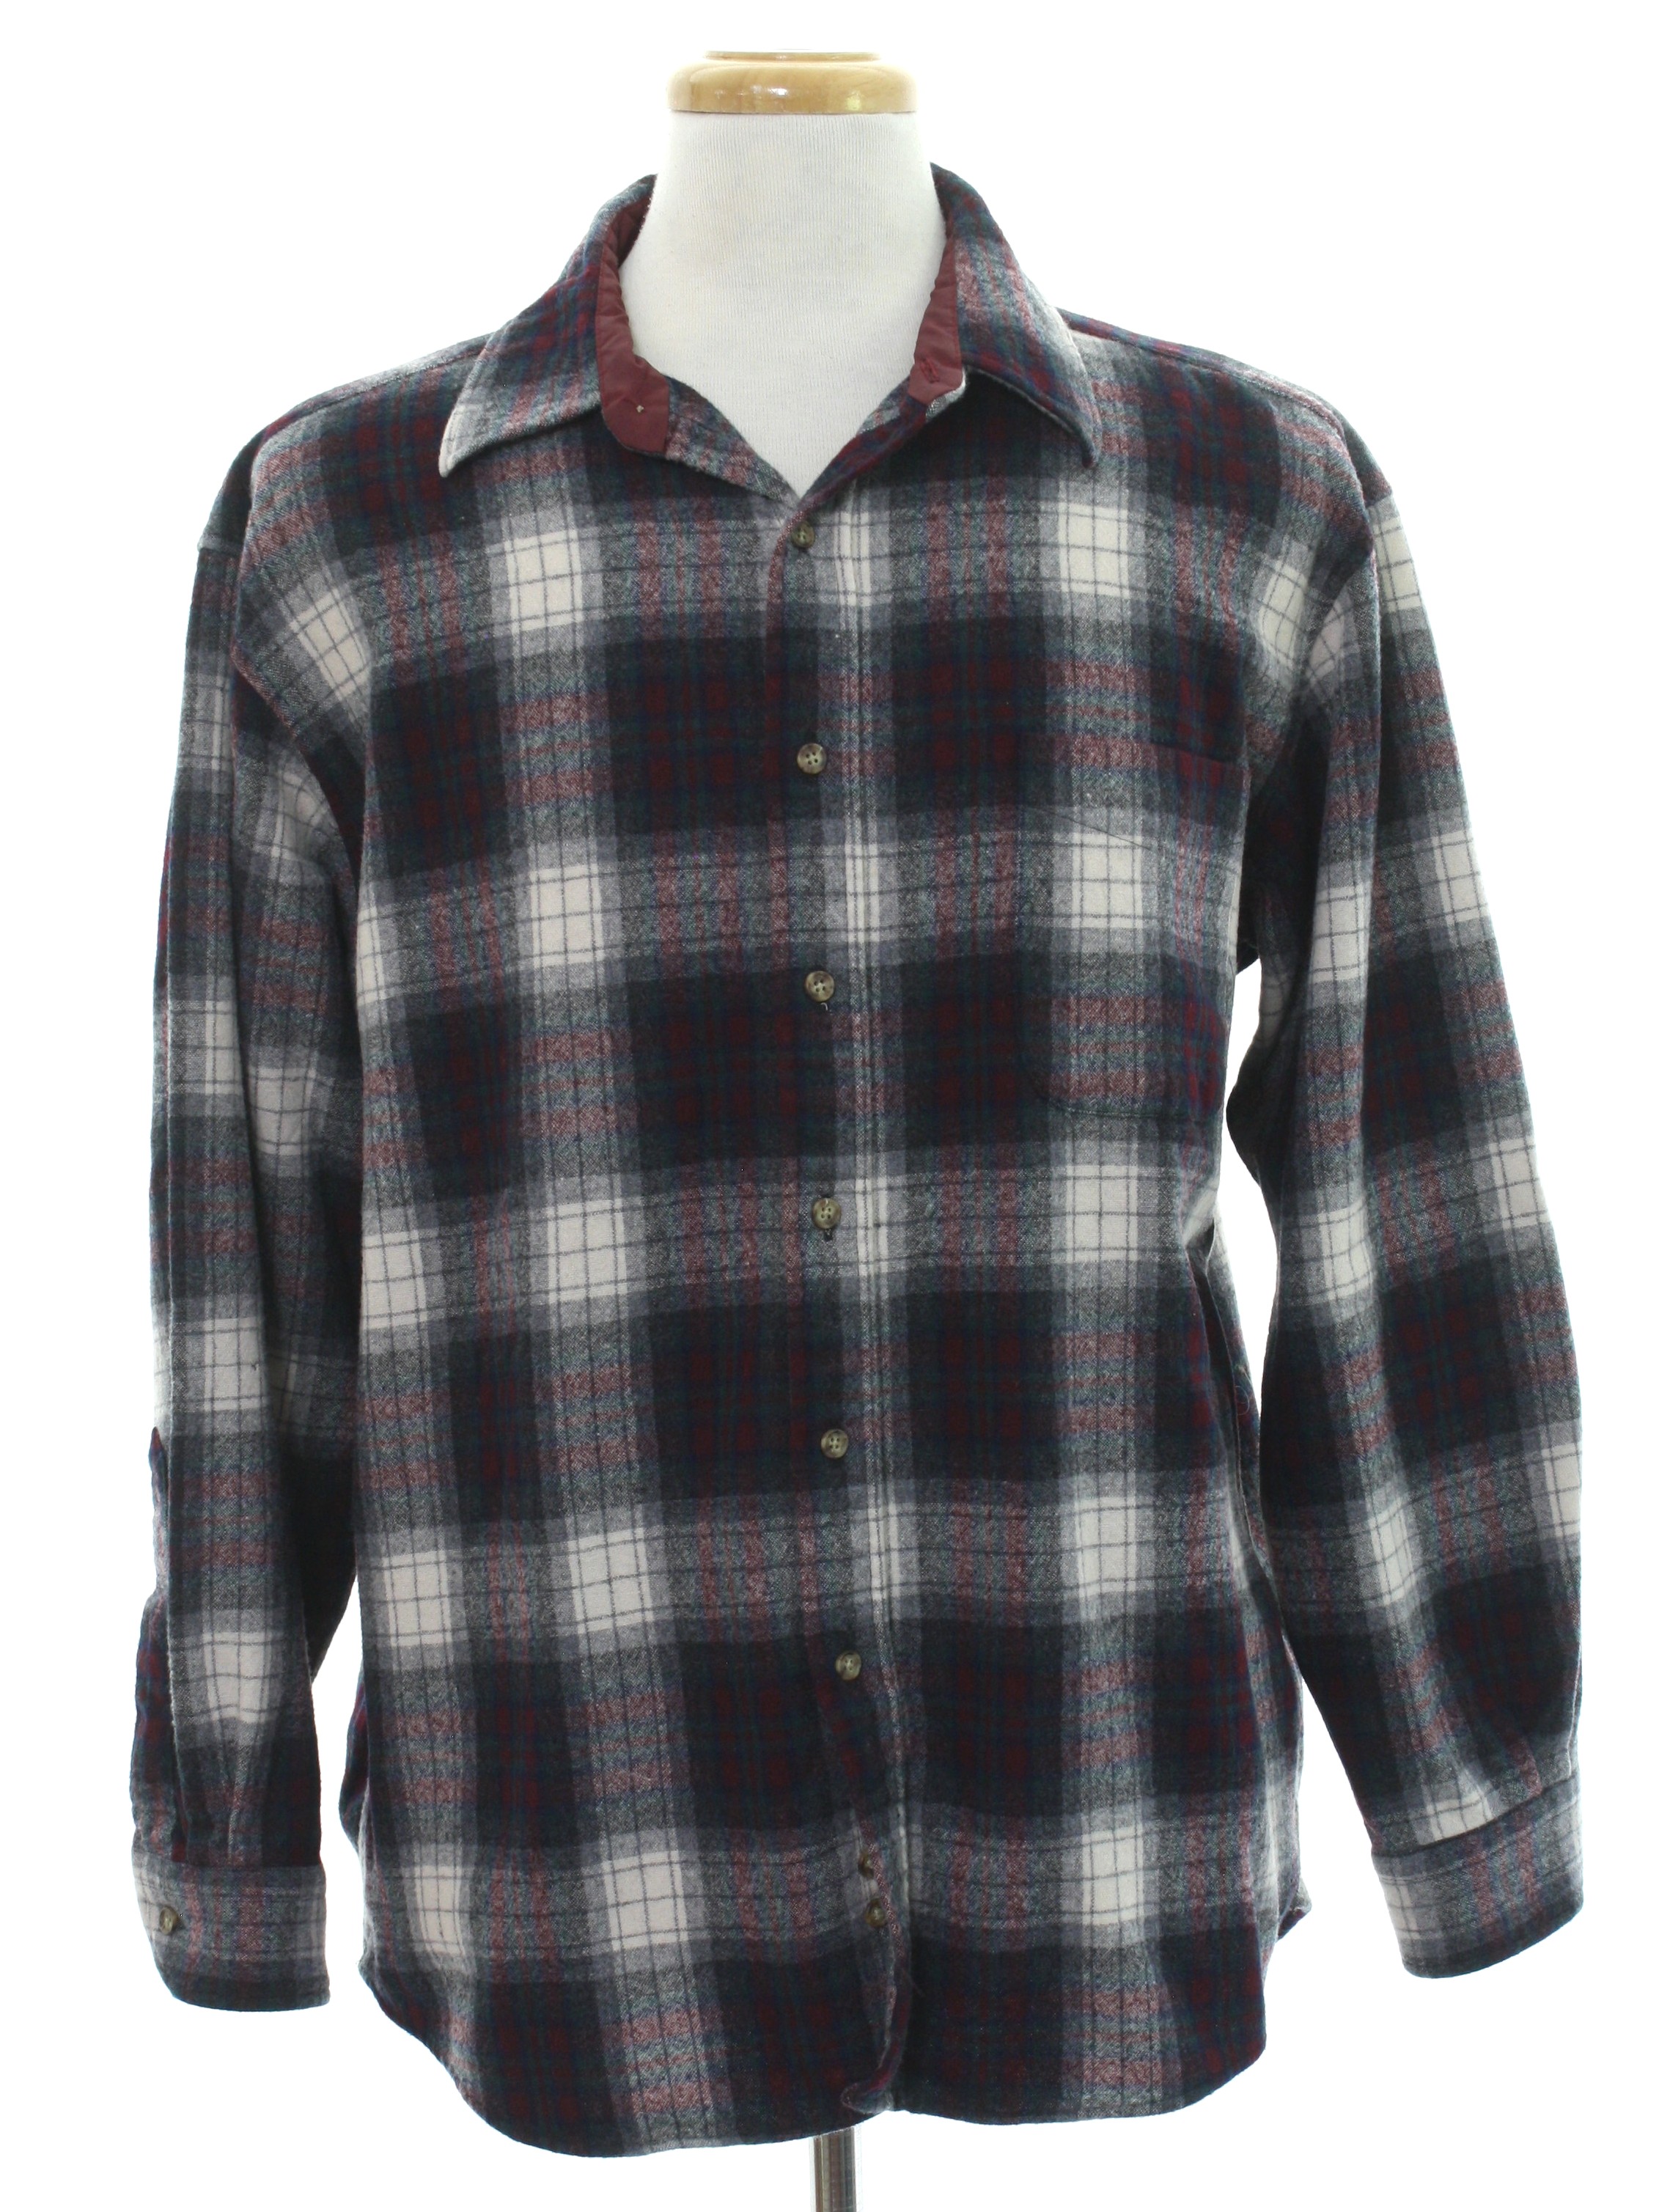 Retro 90s Wool Shirt (Pendleton) : 90s -Pendleton- Mens cream, grey